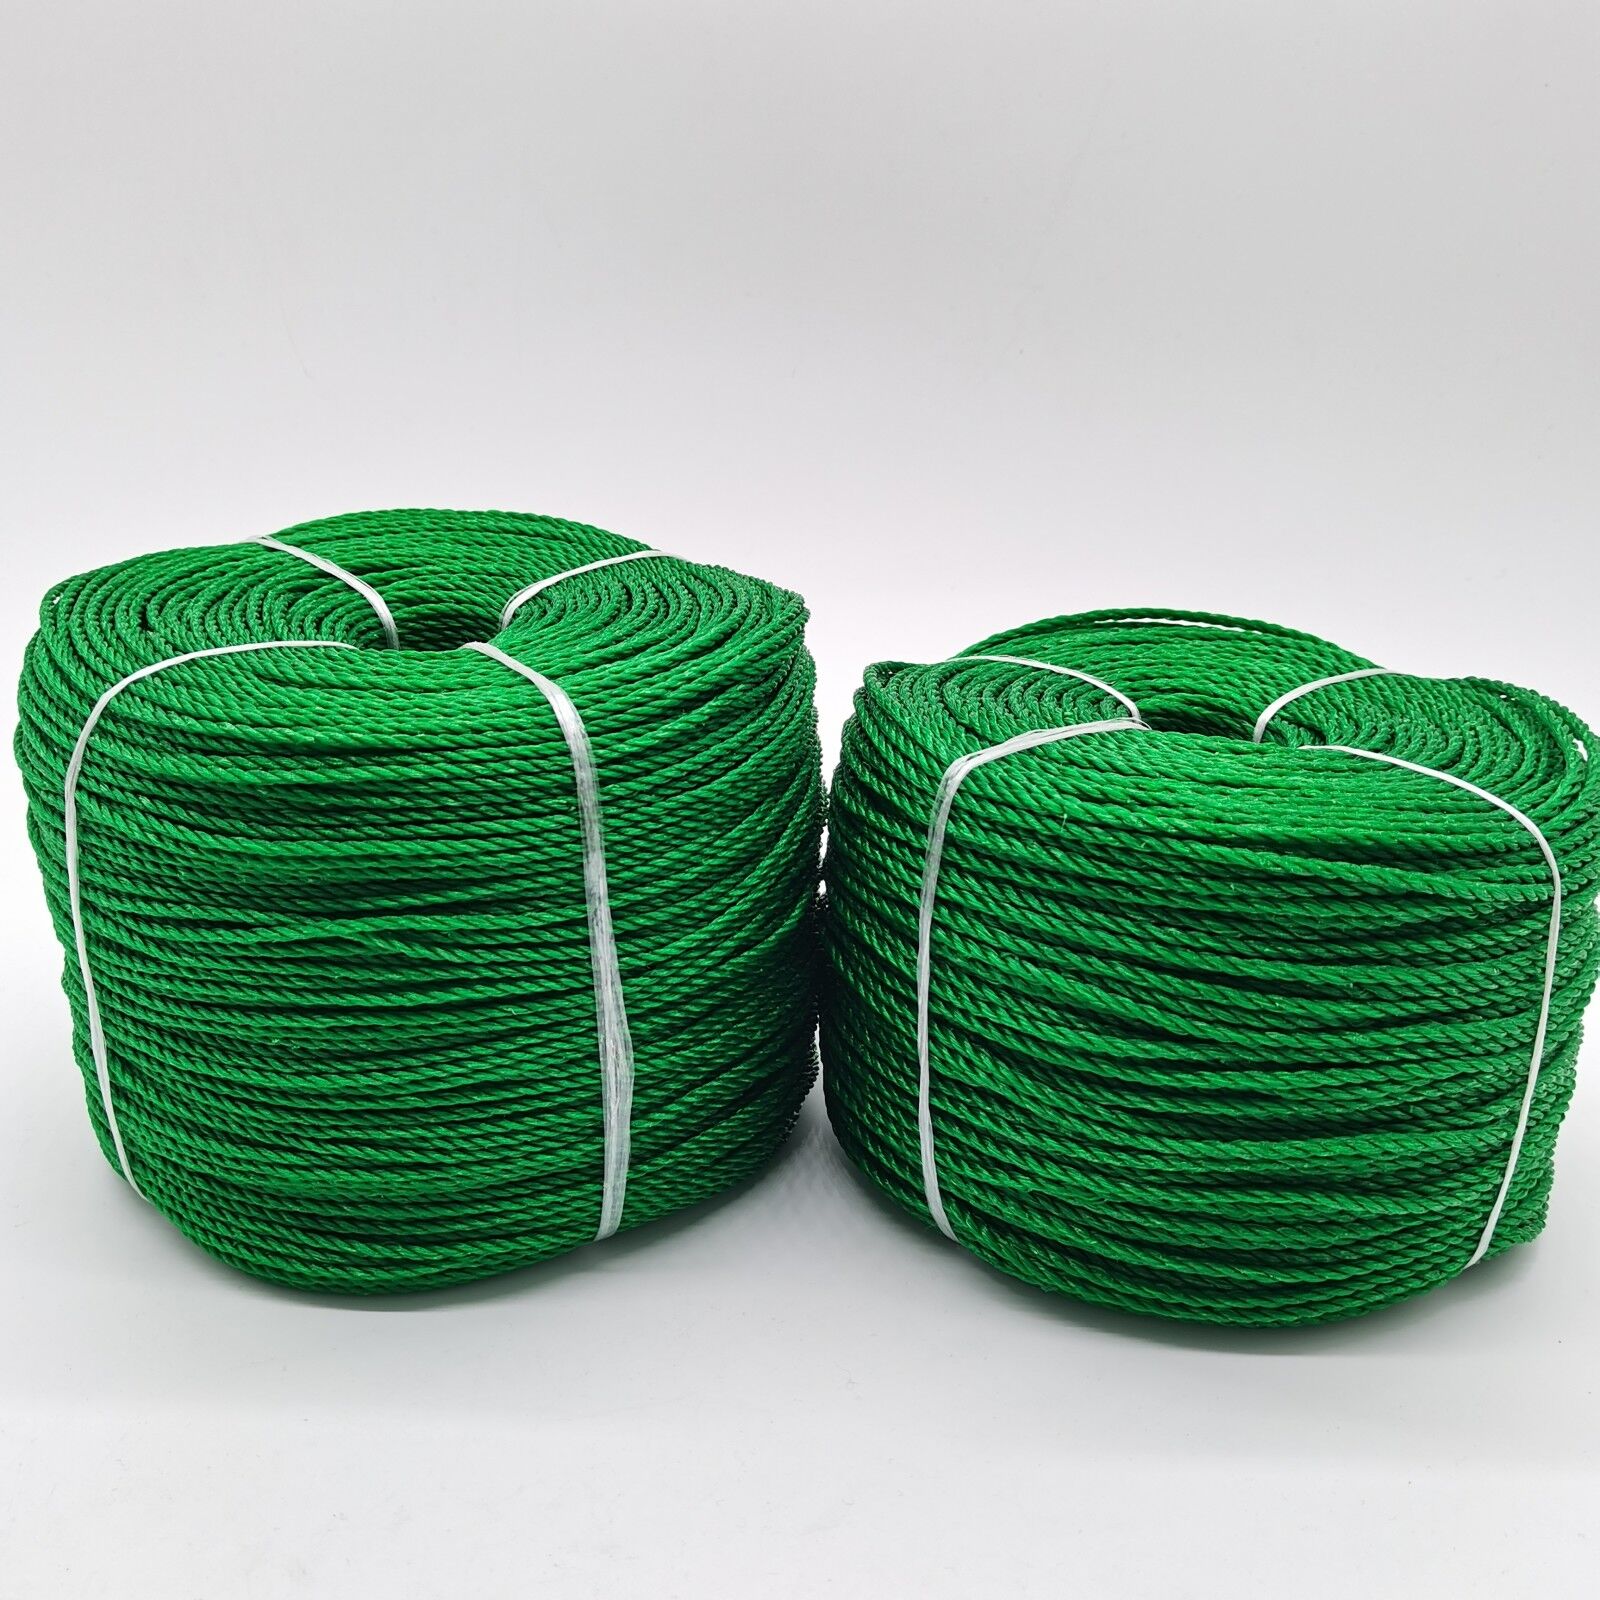 Wholesale Braided Pp Rope - 6mm diameter 100% PE Polyethylene rope comprising 3 strands fishing rope – Florescence